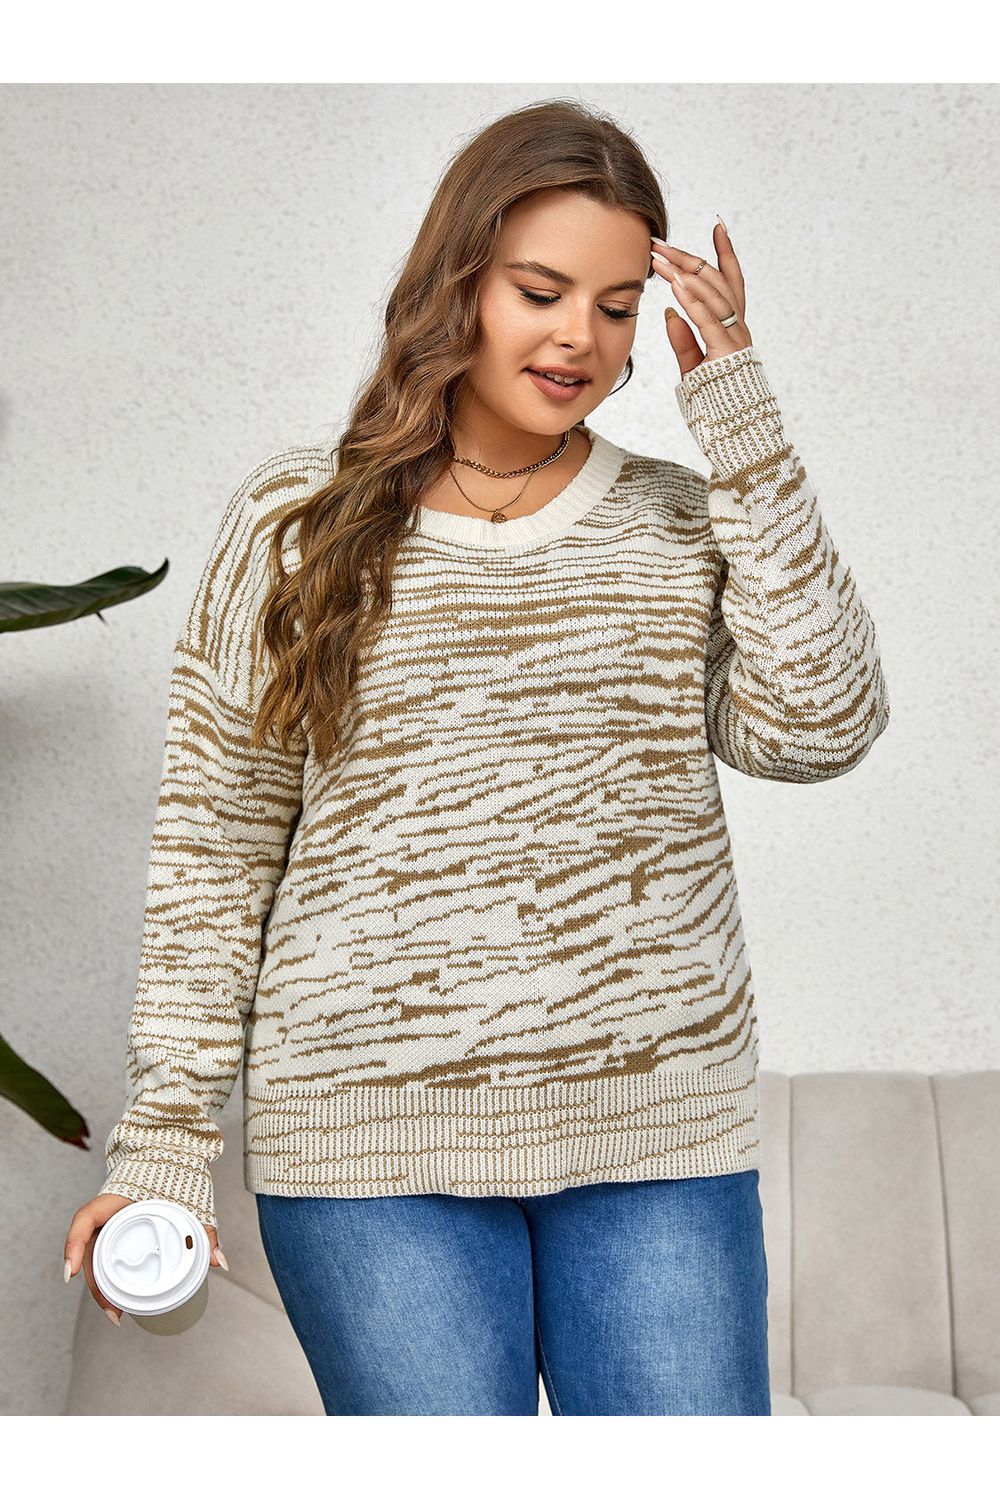 Plus Size Women Round Neck Long Sleeve Sweater - NicholesGifts.online